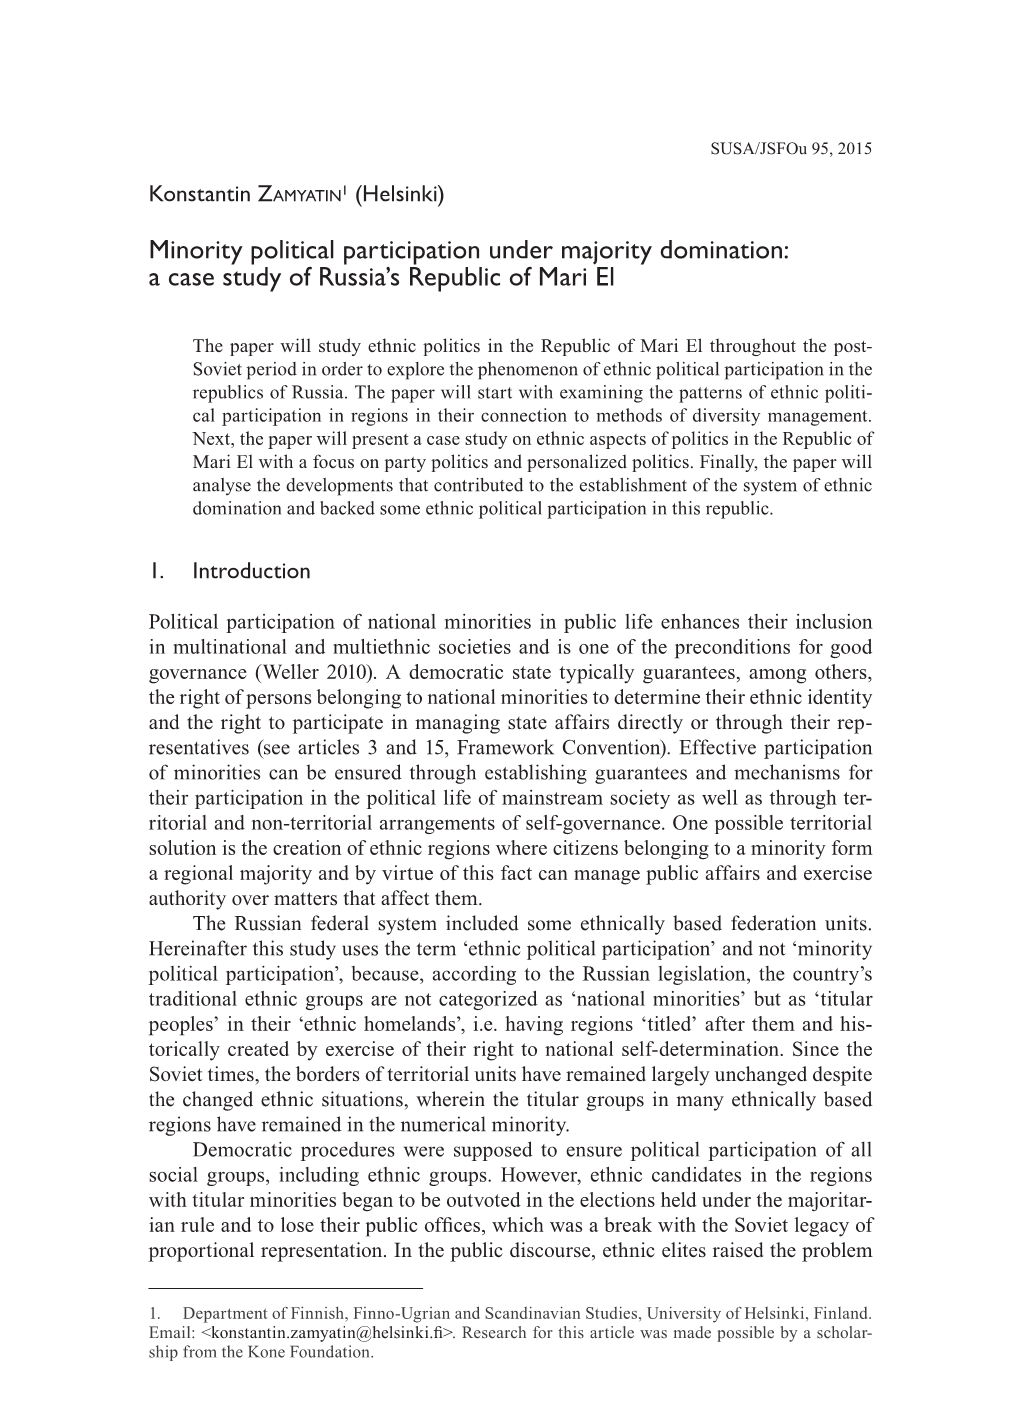 Minority Political Participation Under Majority Domination: a Case Study of Russia’S Republic of Mari El